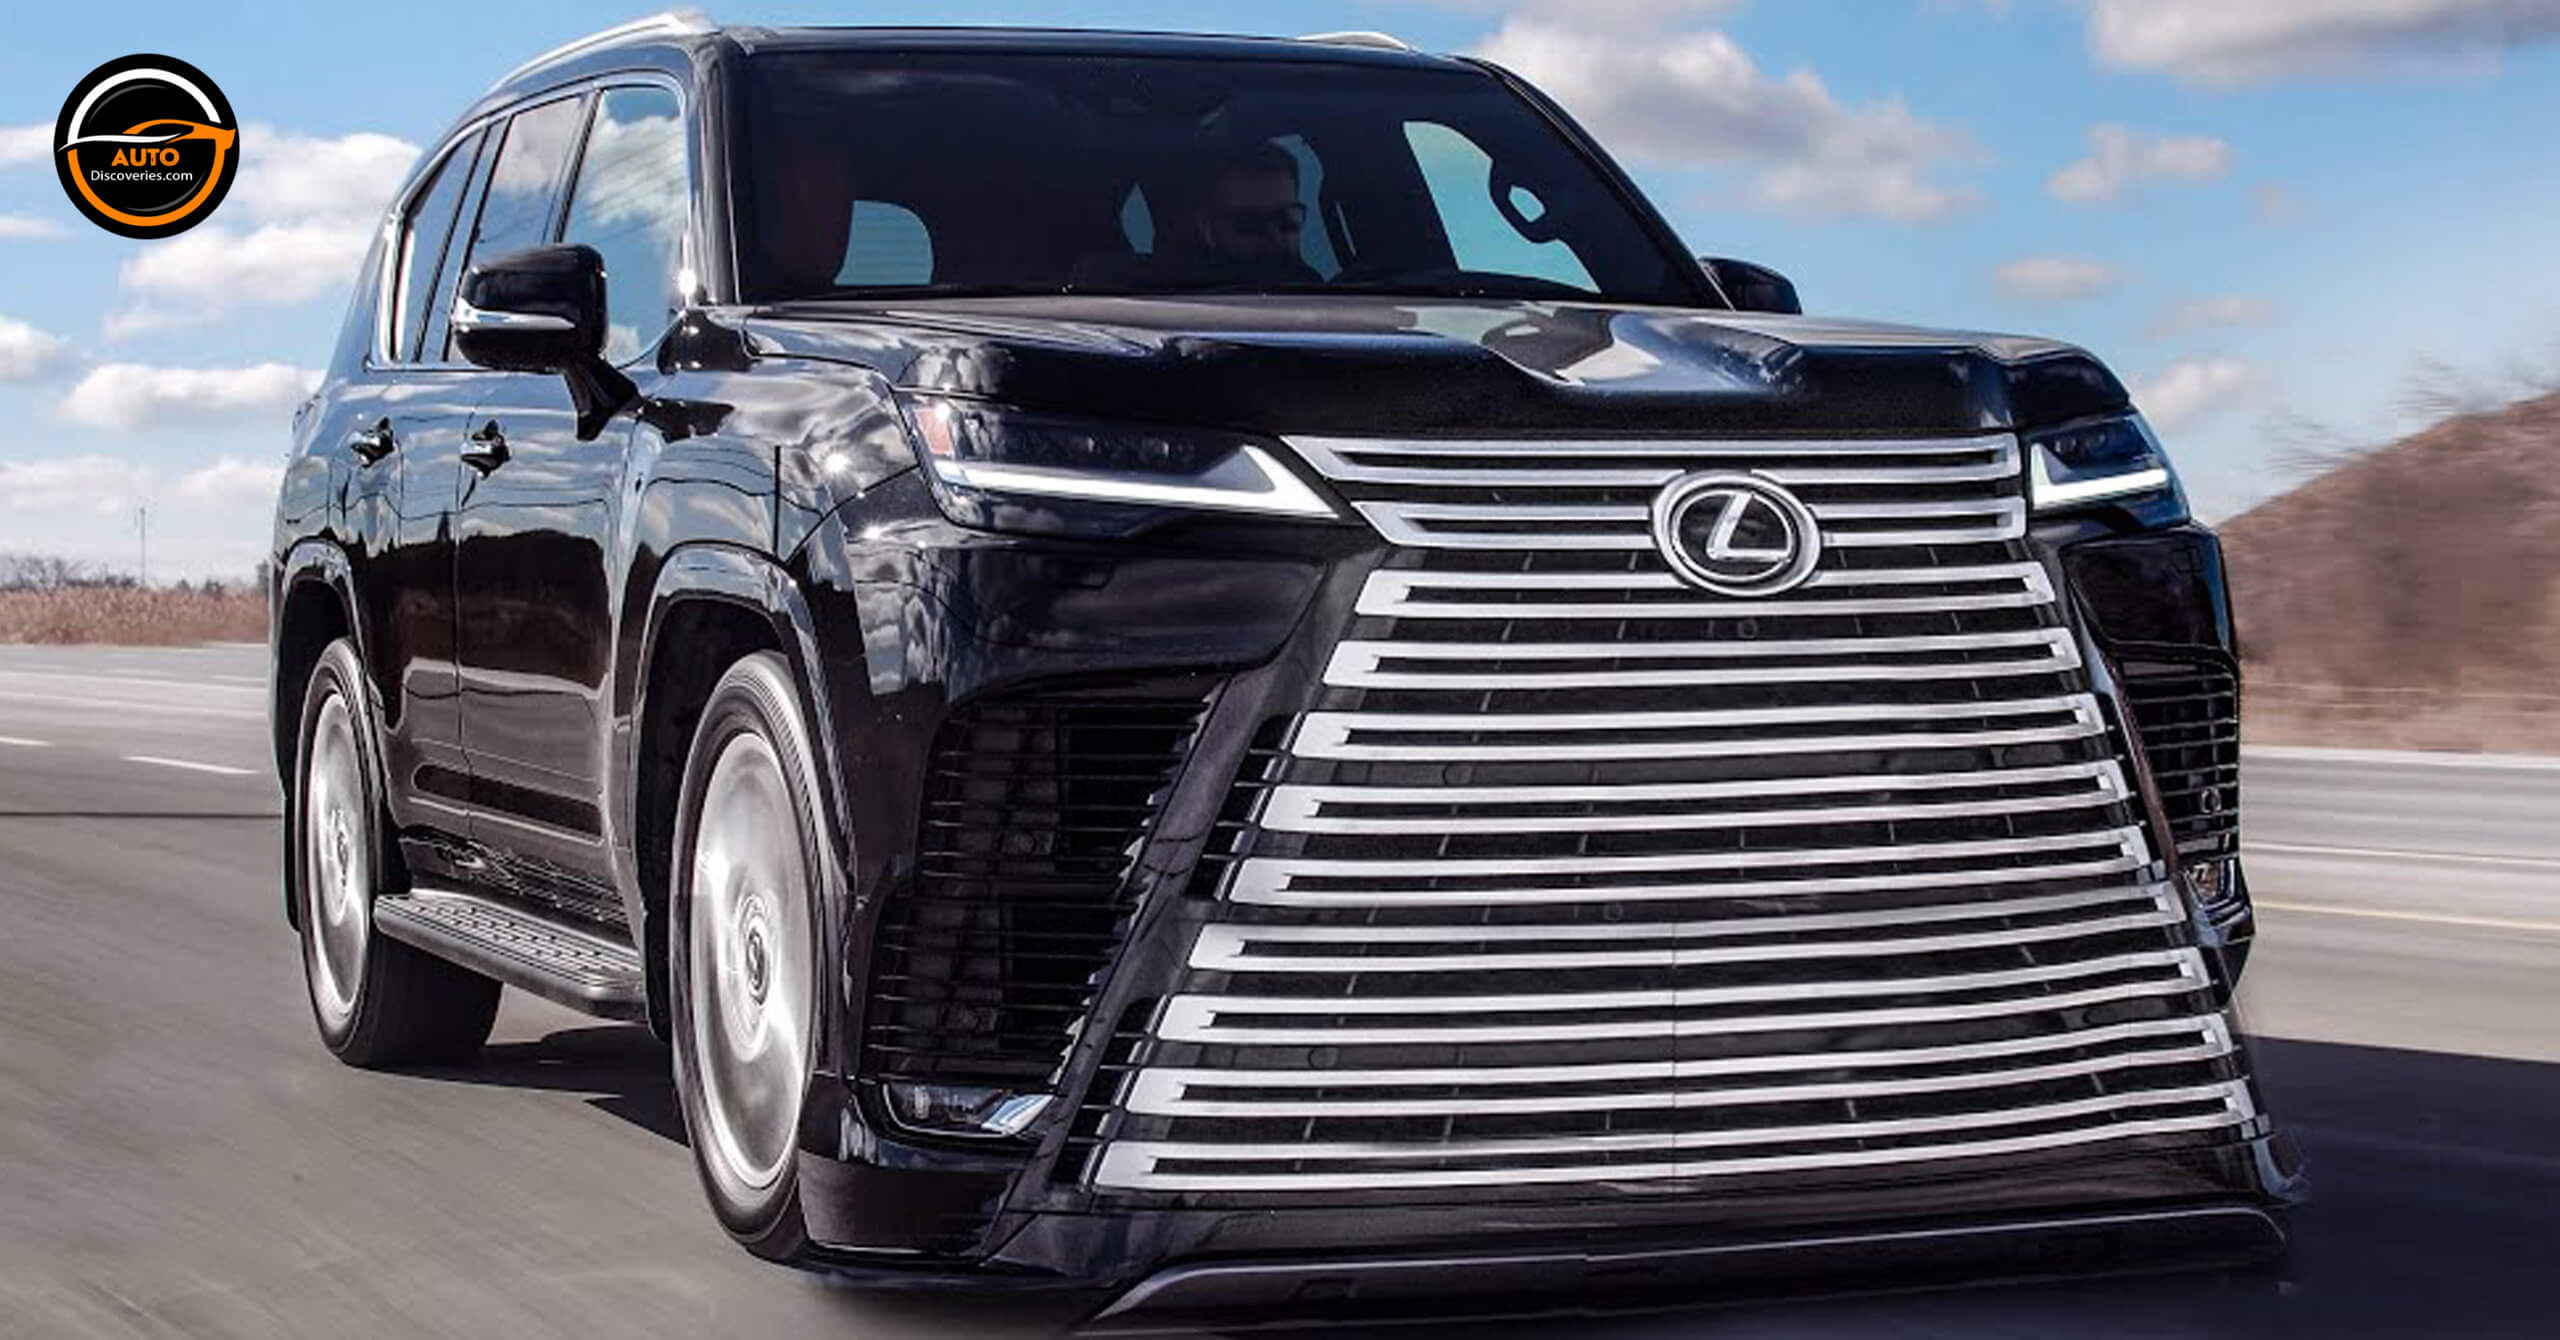 2022-Lexus-LX600-Ultra-Luxury-Review-scaled.jpg